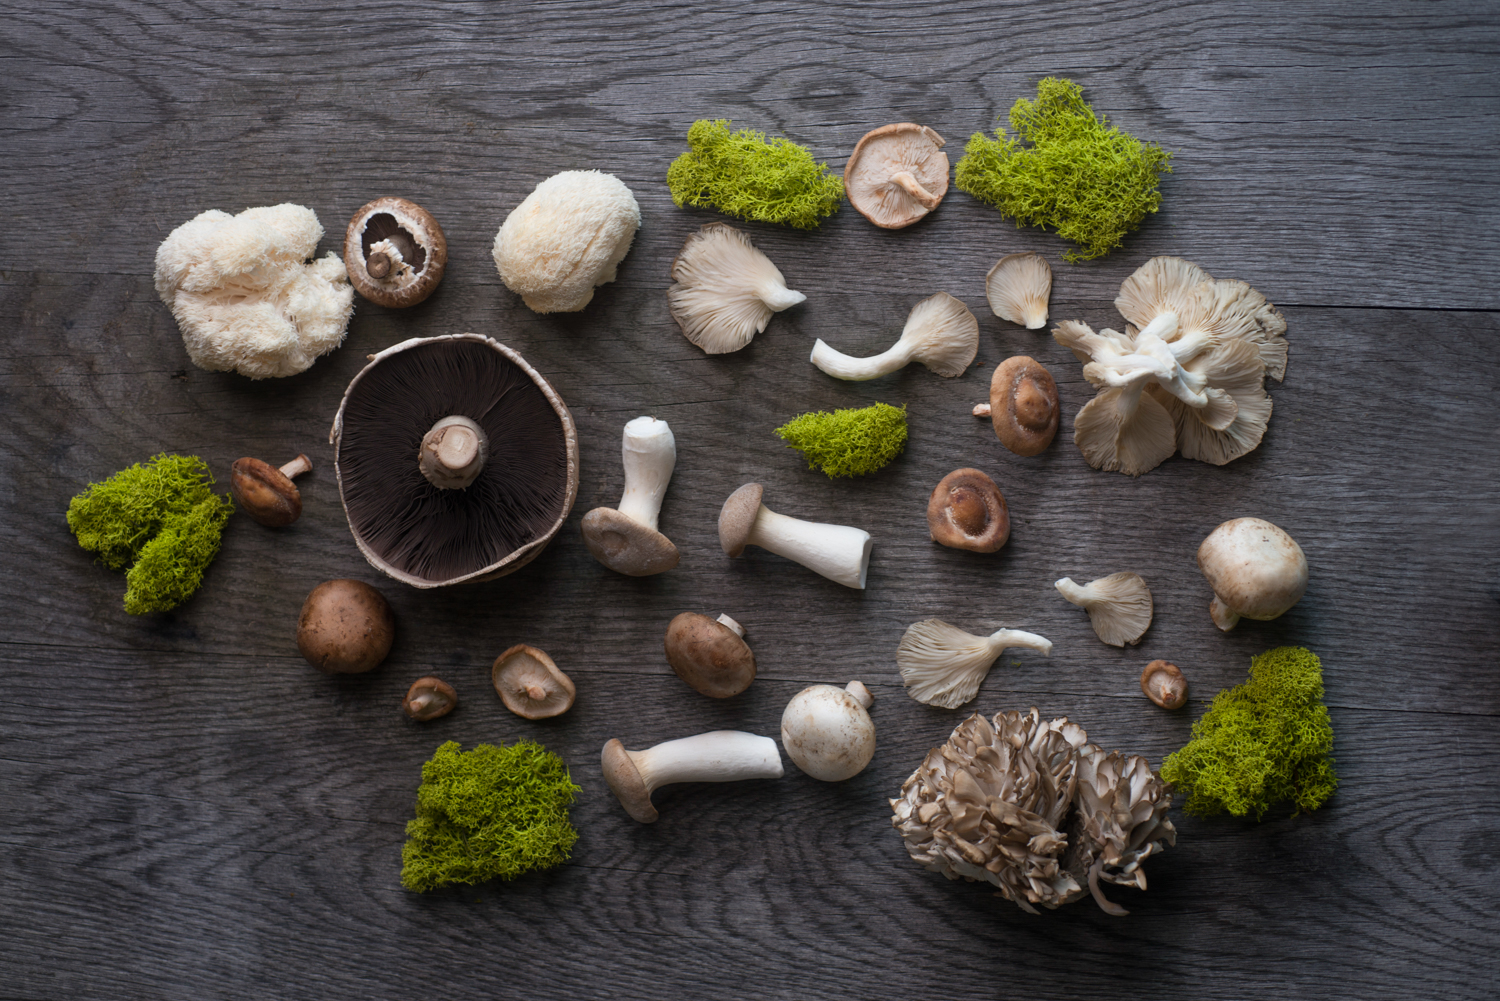 exotic mushrooms on a wood table